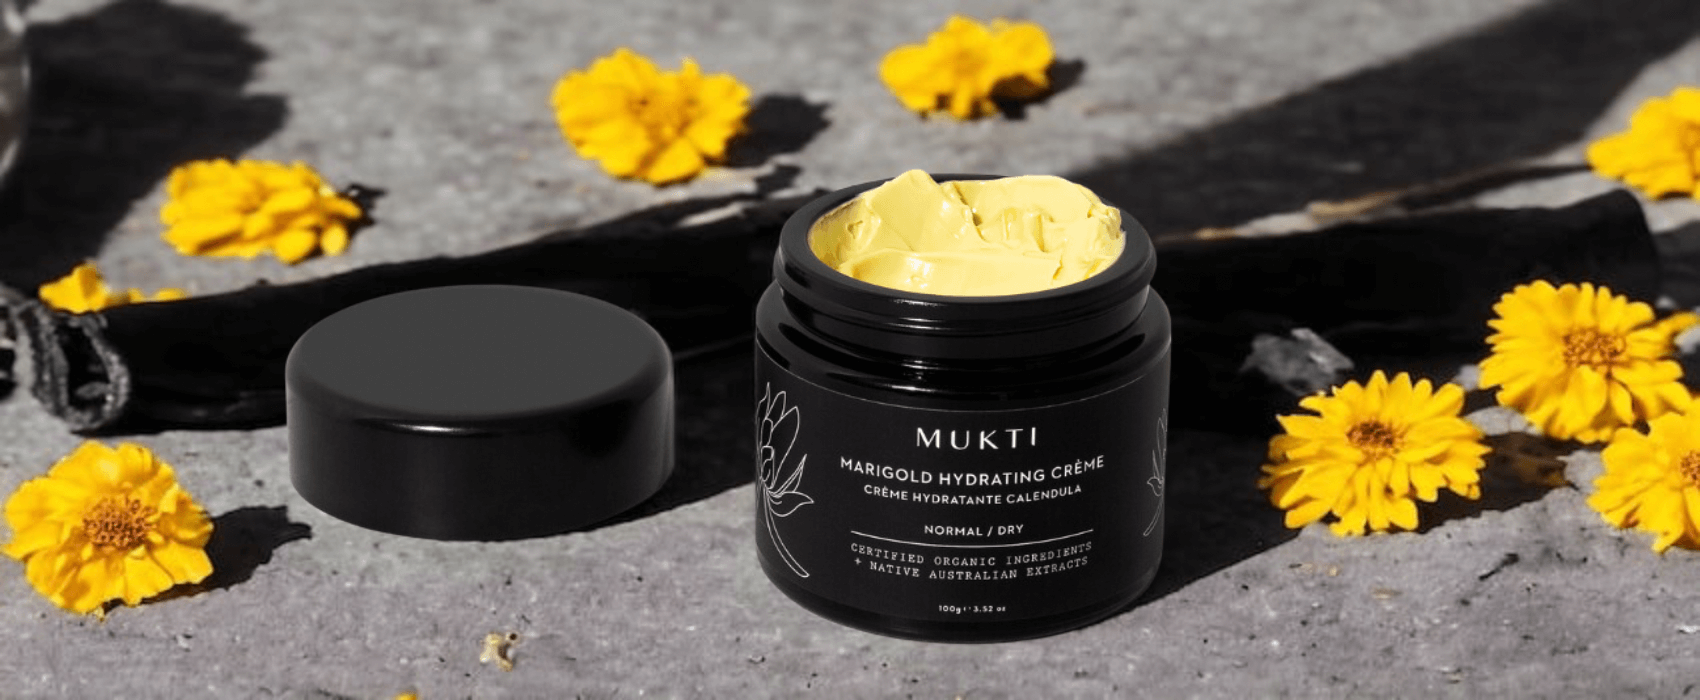 Blog -Spotlight brand of the month: Mukti Organics